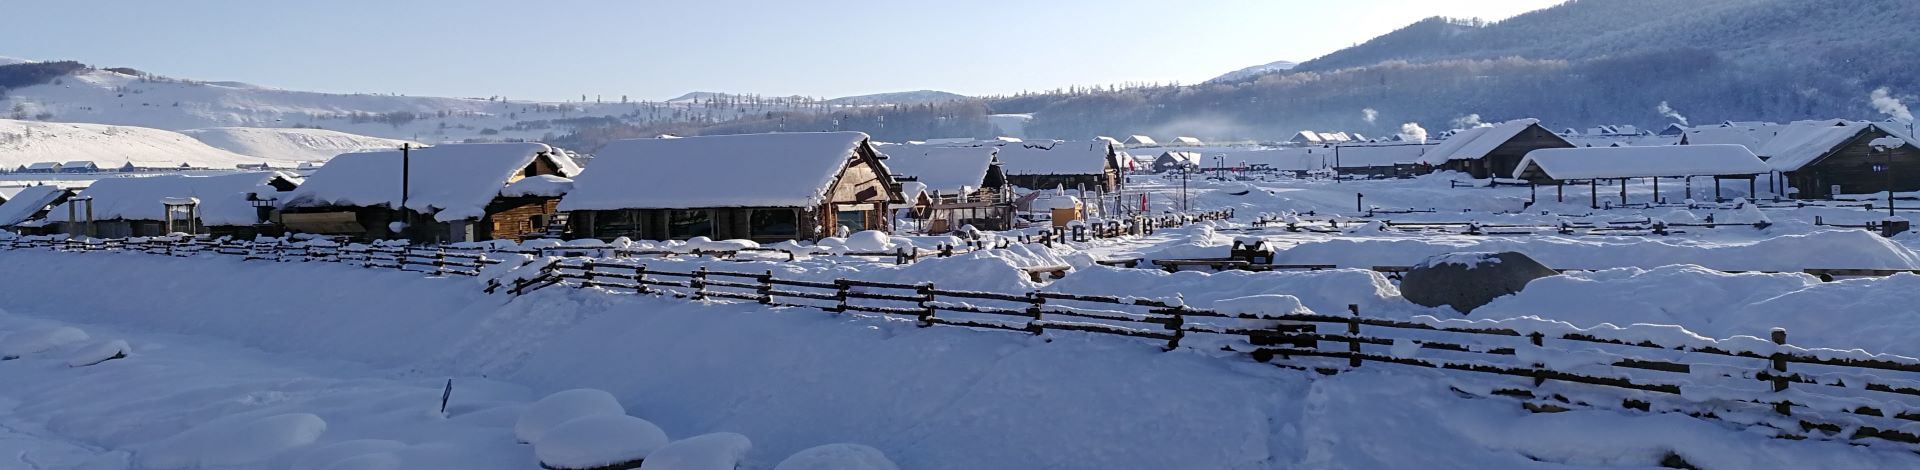 Kanas village in Winter